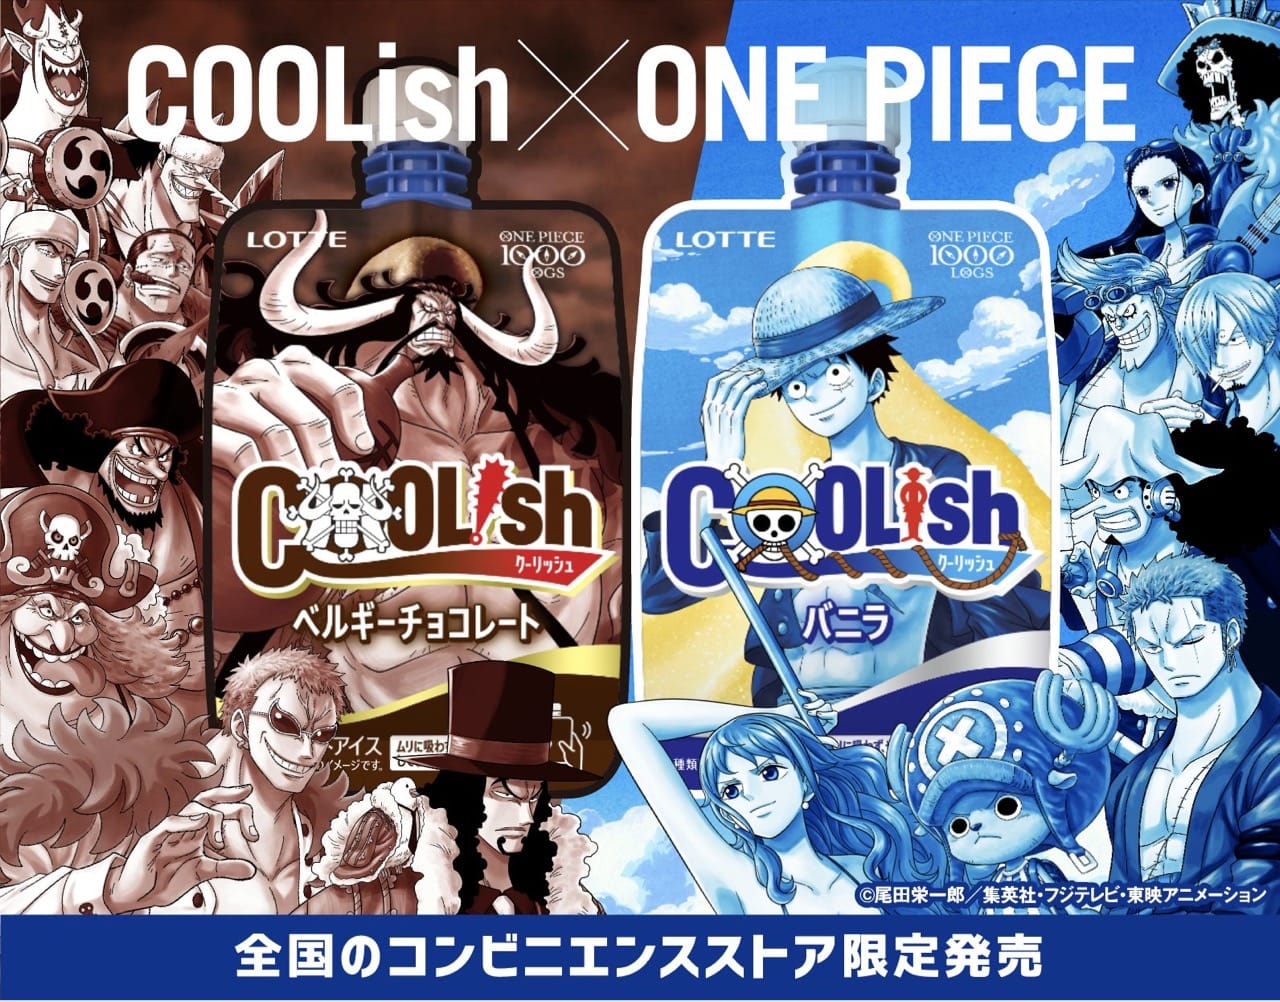 One Piece ワンピース クーリッシュ 4 6よりコラボパッケージ登場